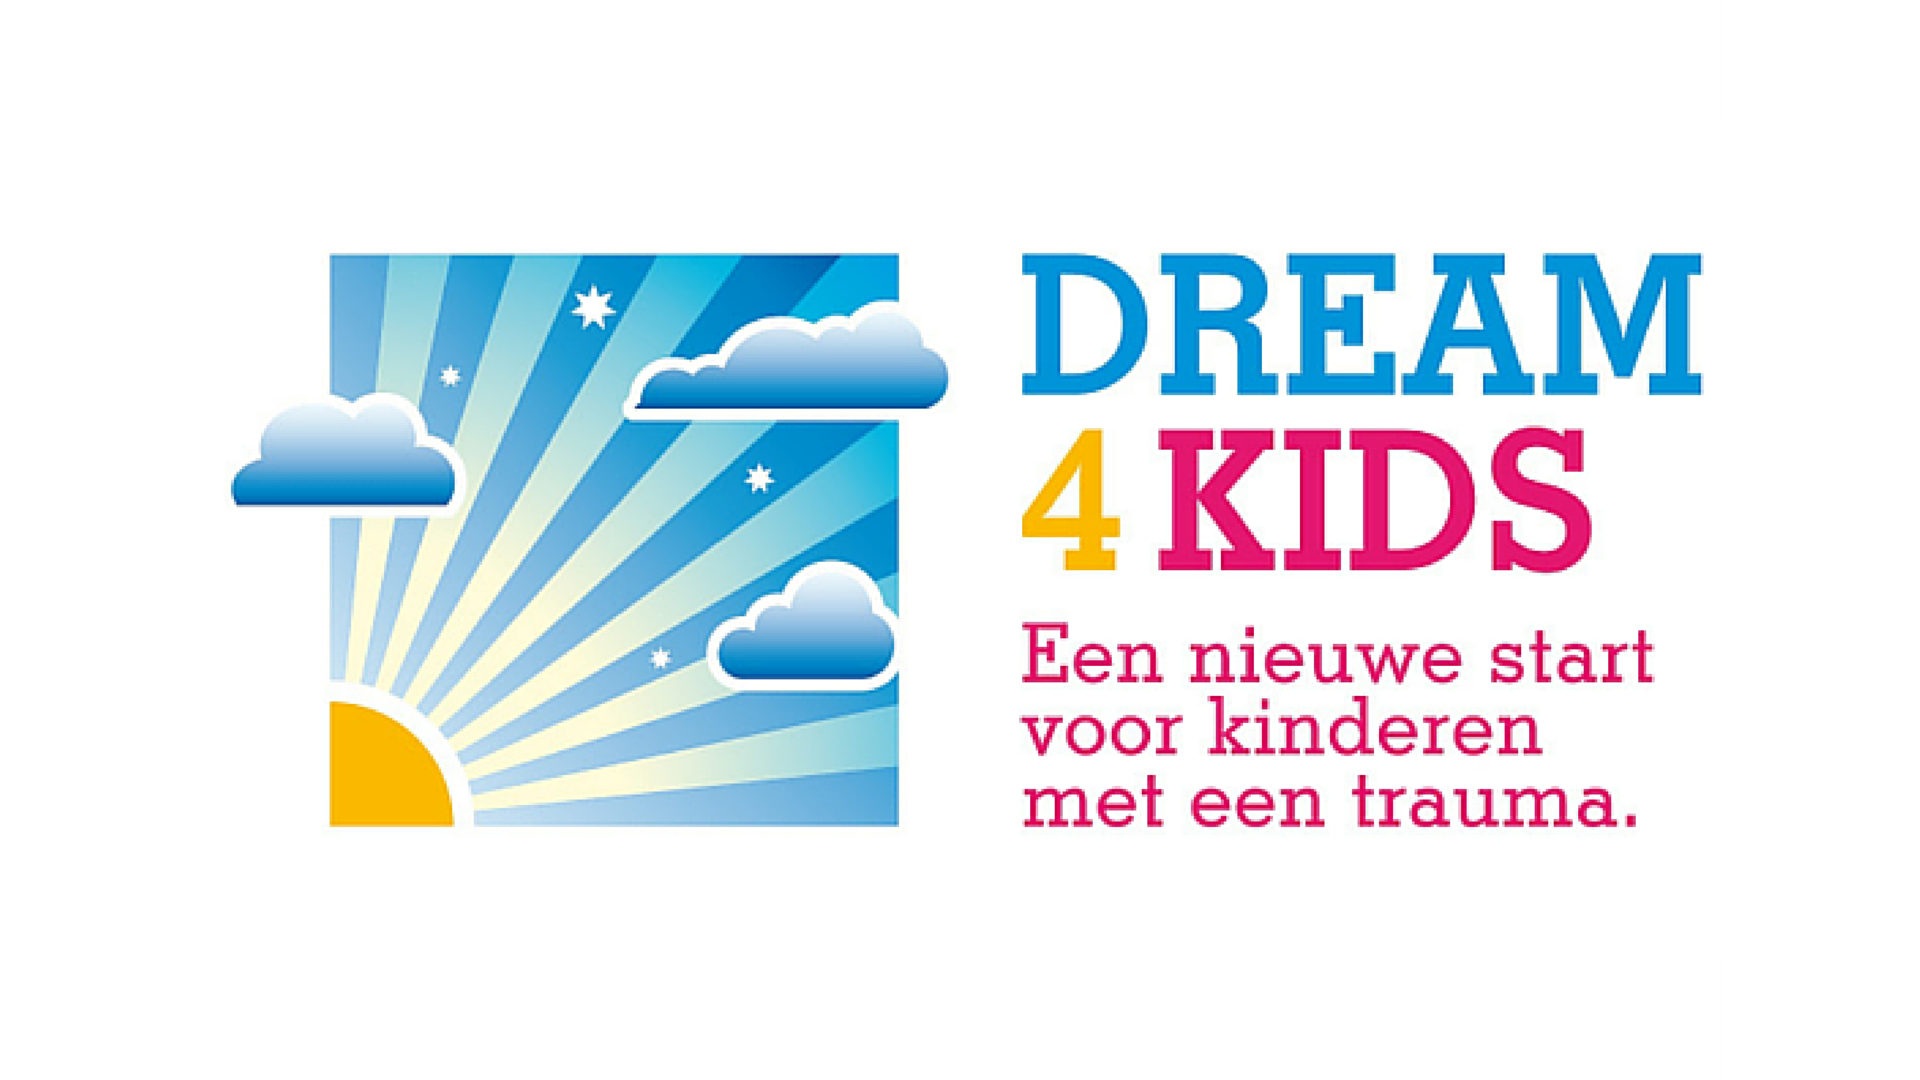 Dream 4 Kids